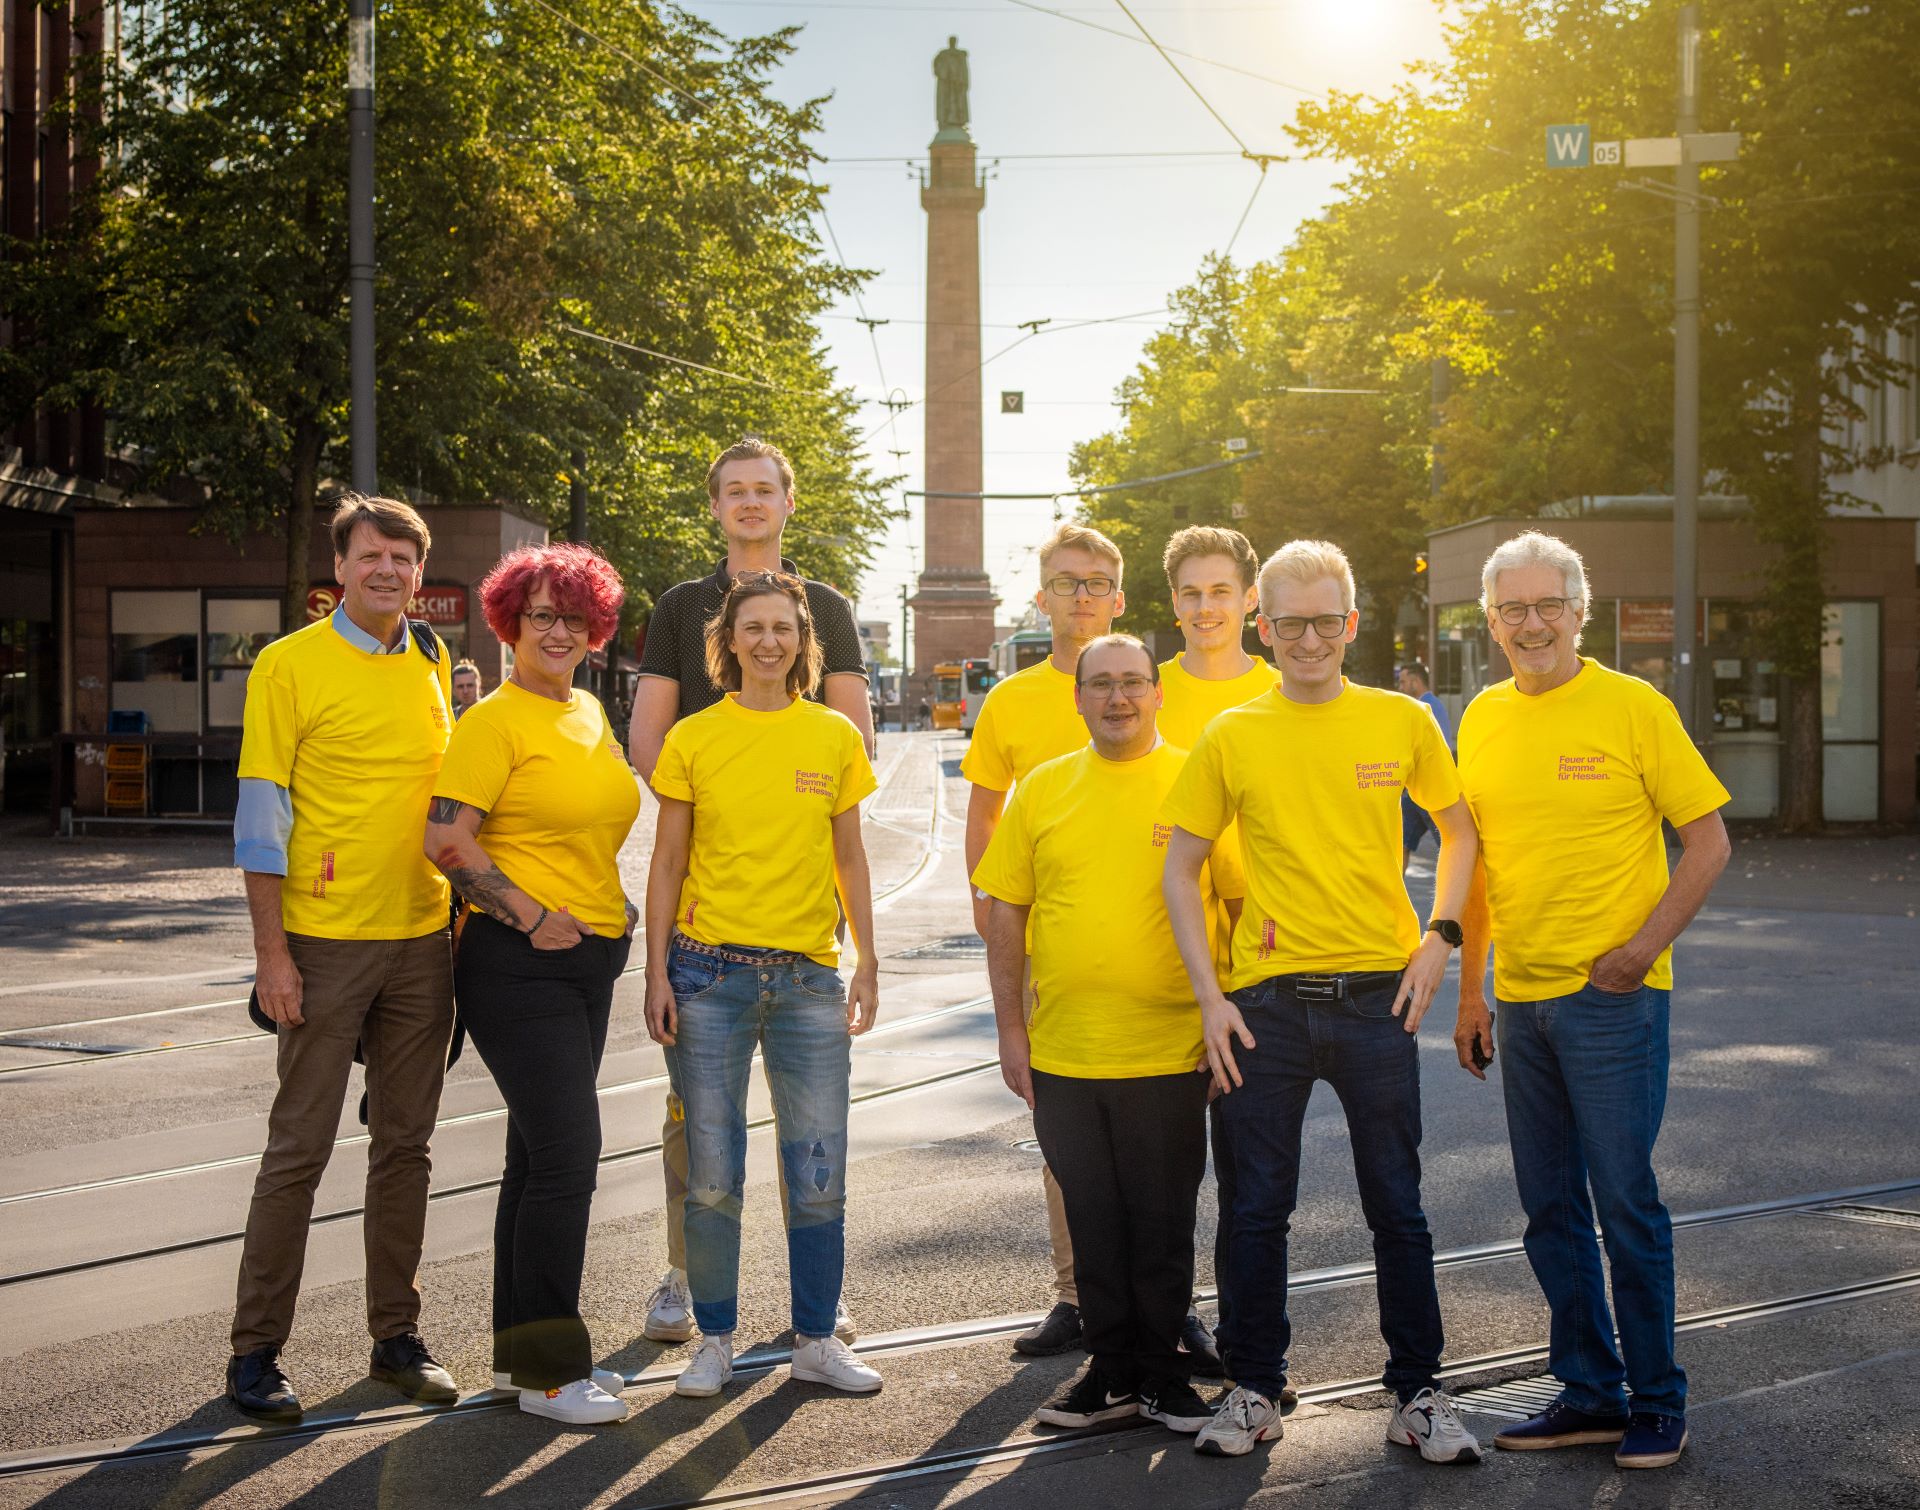 FDP Darmstadt election campaign team